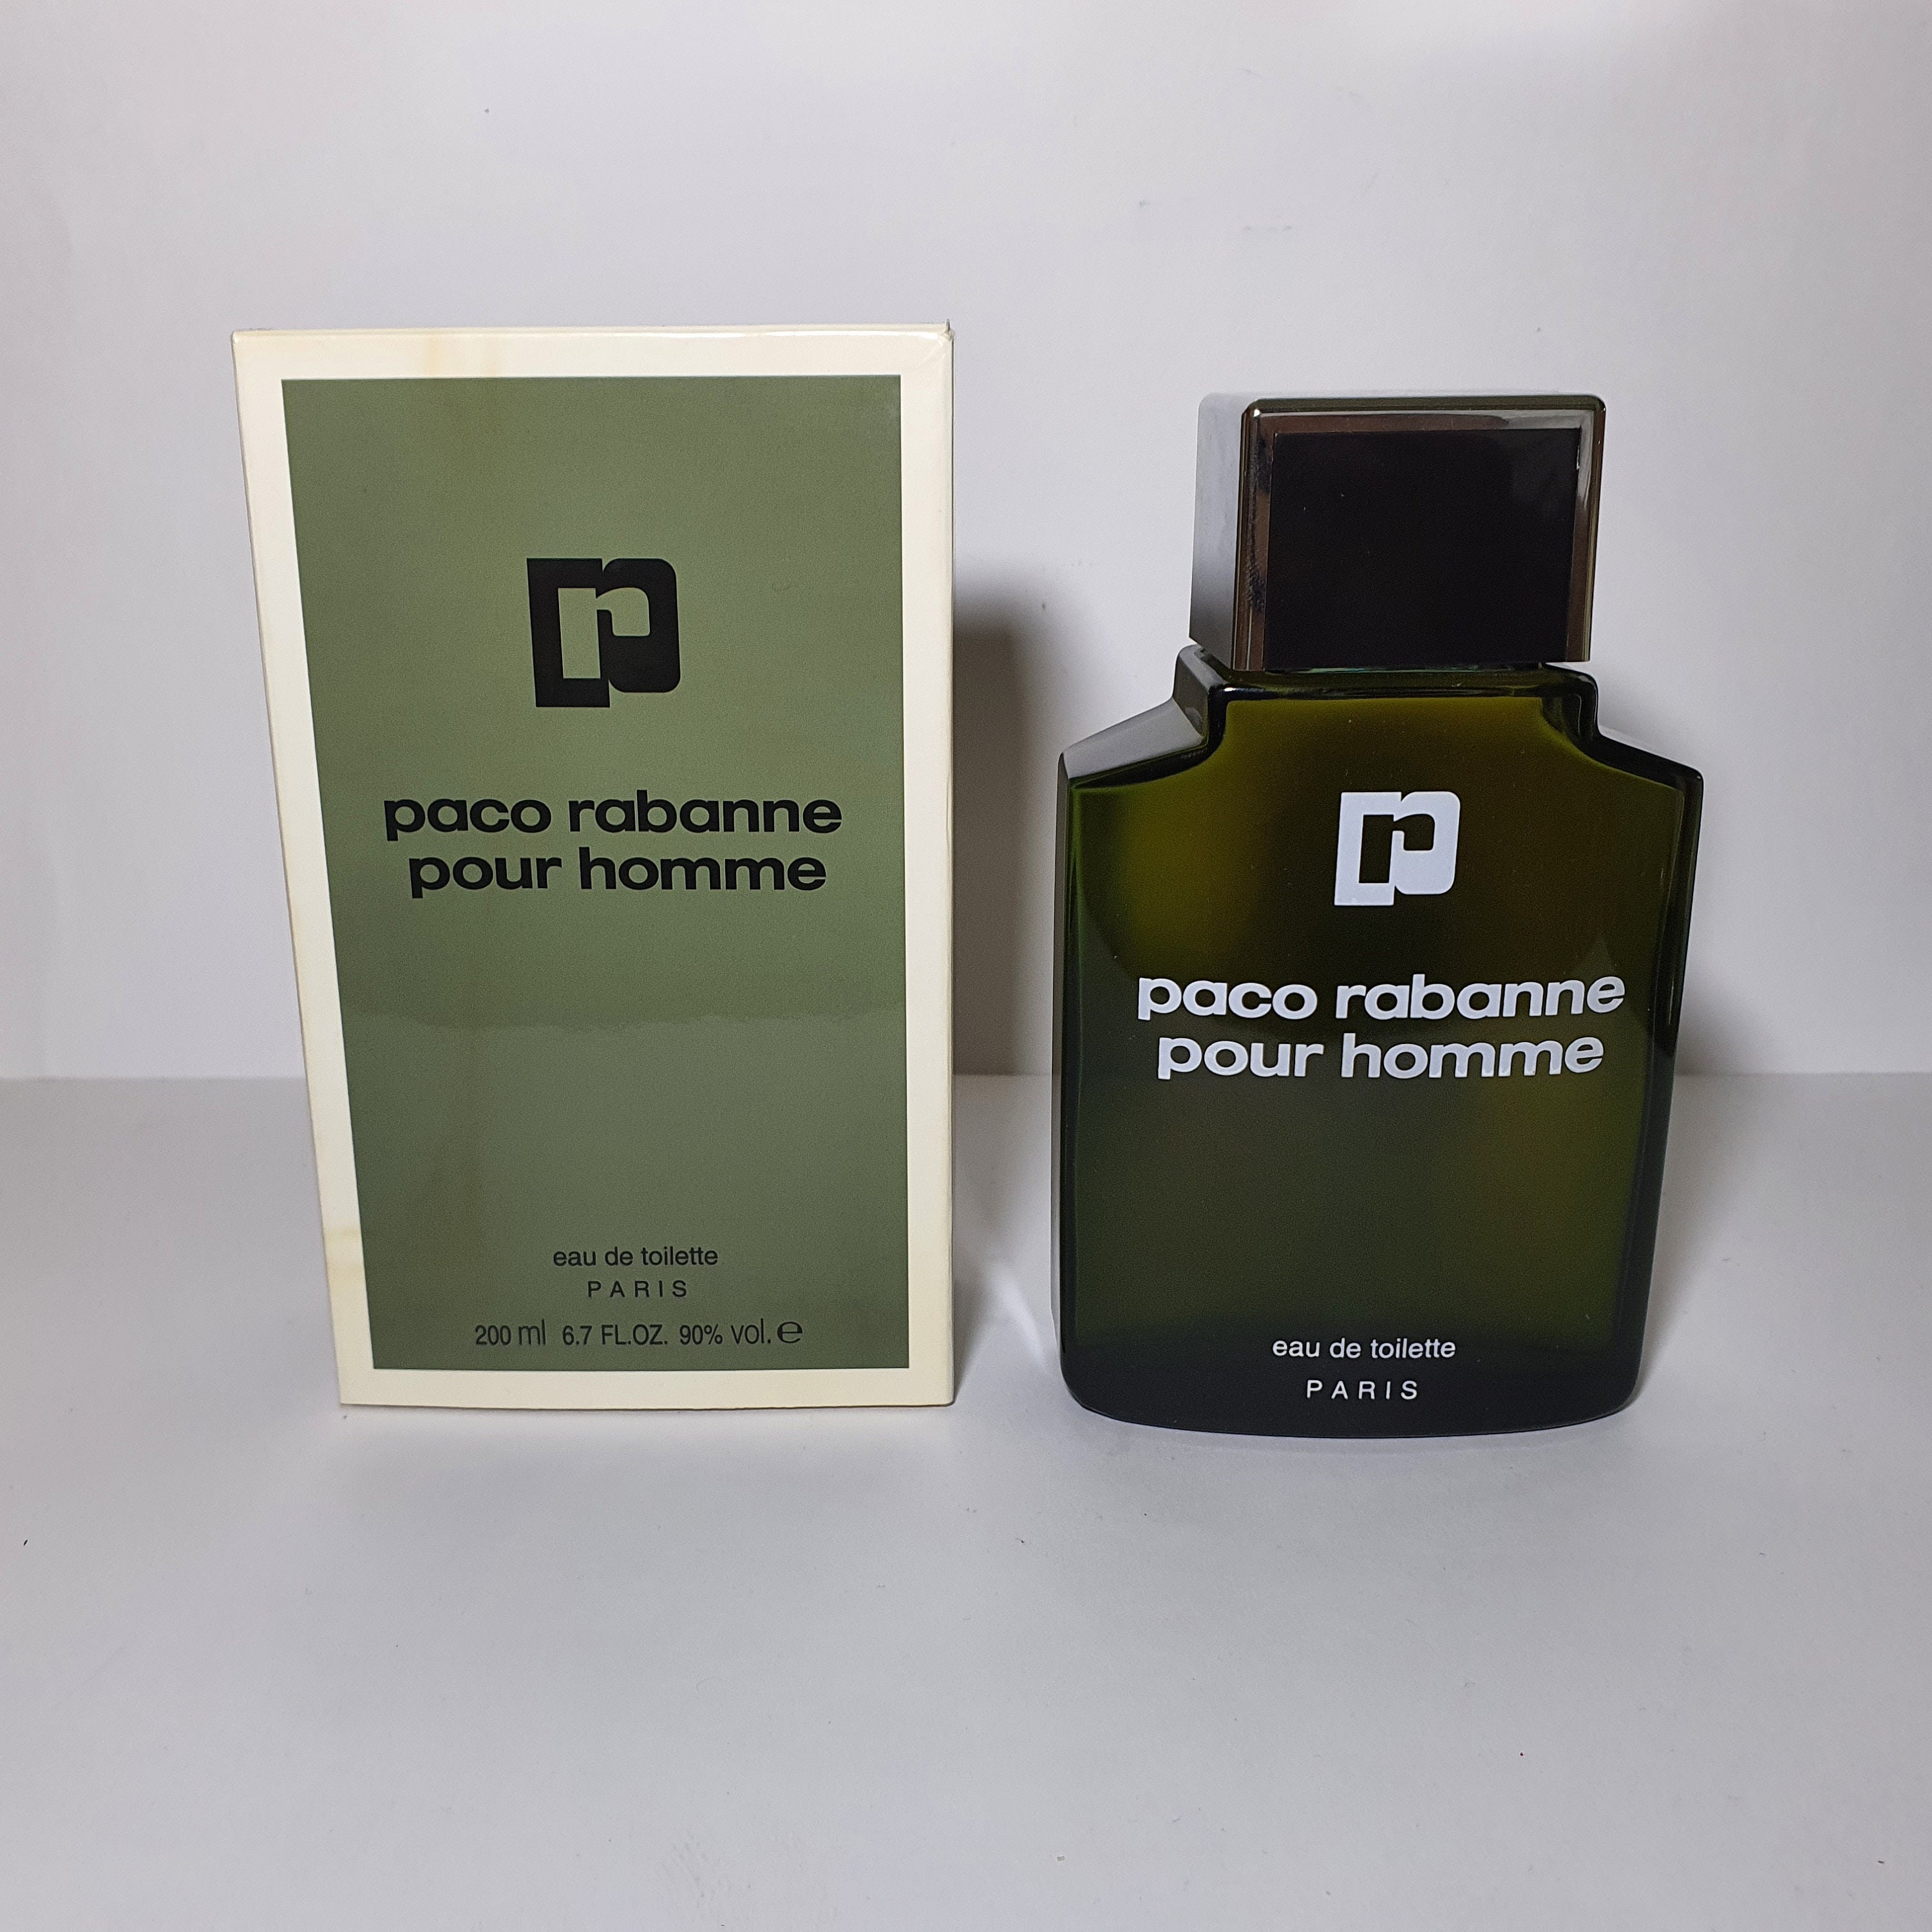 Paco Rabanne Fame Eau De Perfume Spray 80ml/2.7oz in 2023